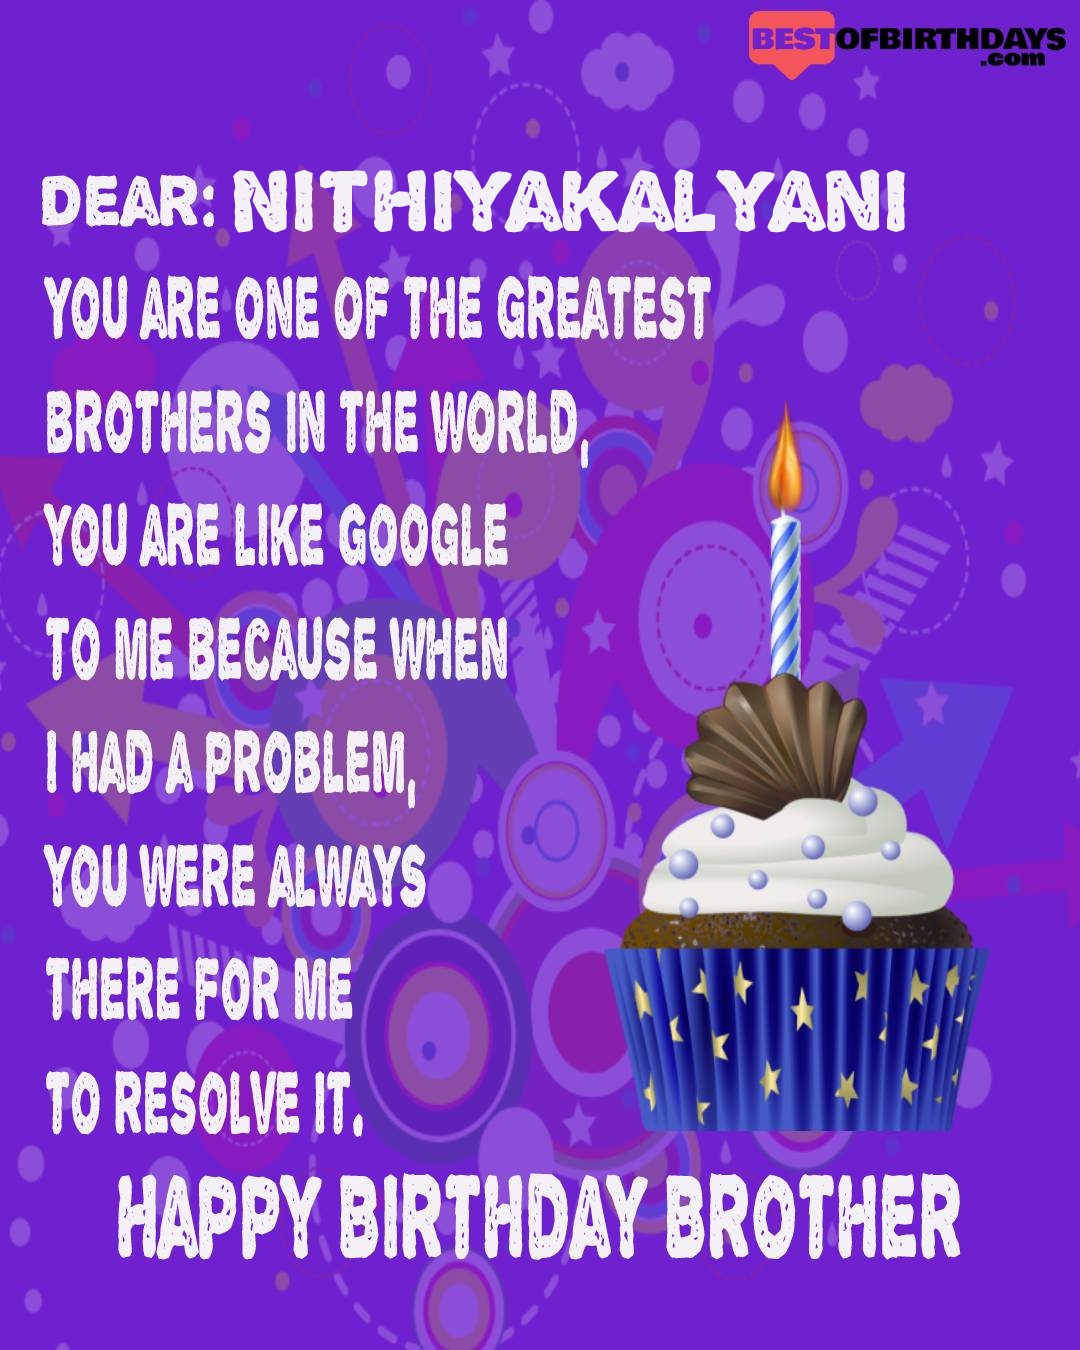 Happy birthday nithiyakalyani bhai brother bro